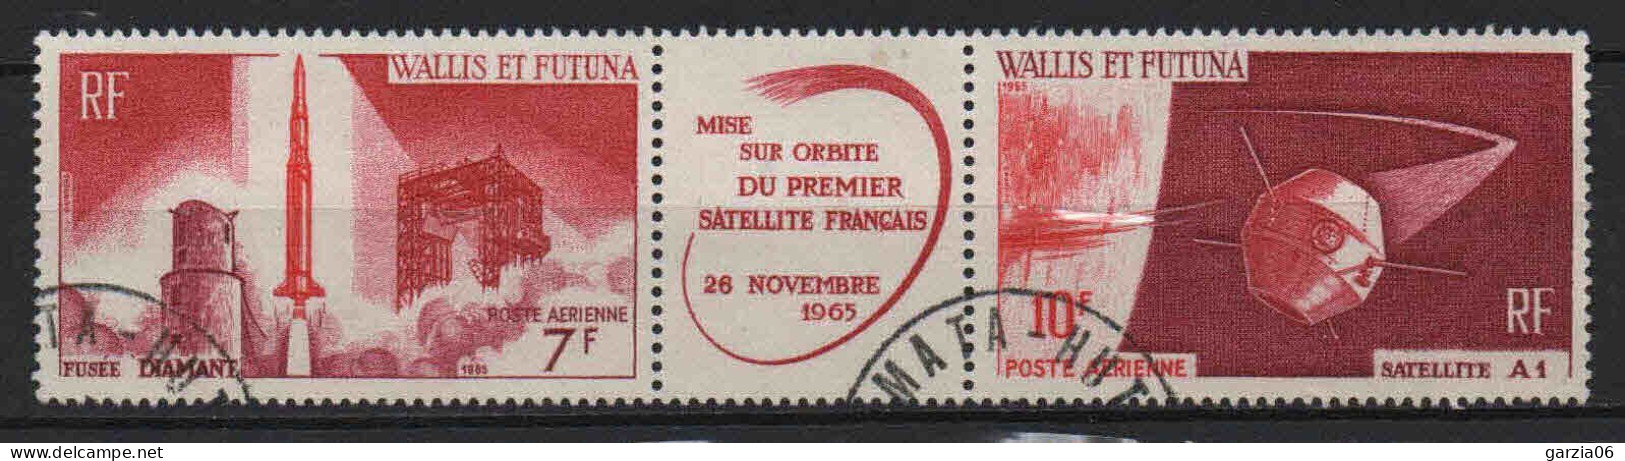 Wallis Et Futuna  - 1965  -  1ier Satellite Français  - PA 24/25A - Oblit - Used - Usati